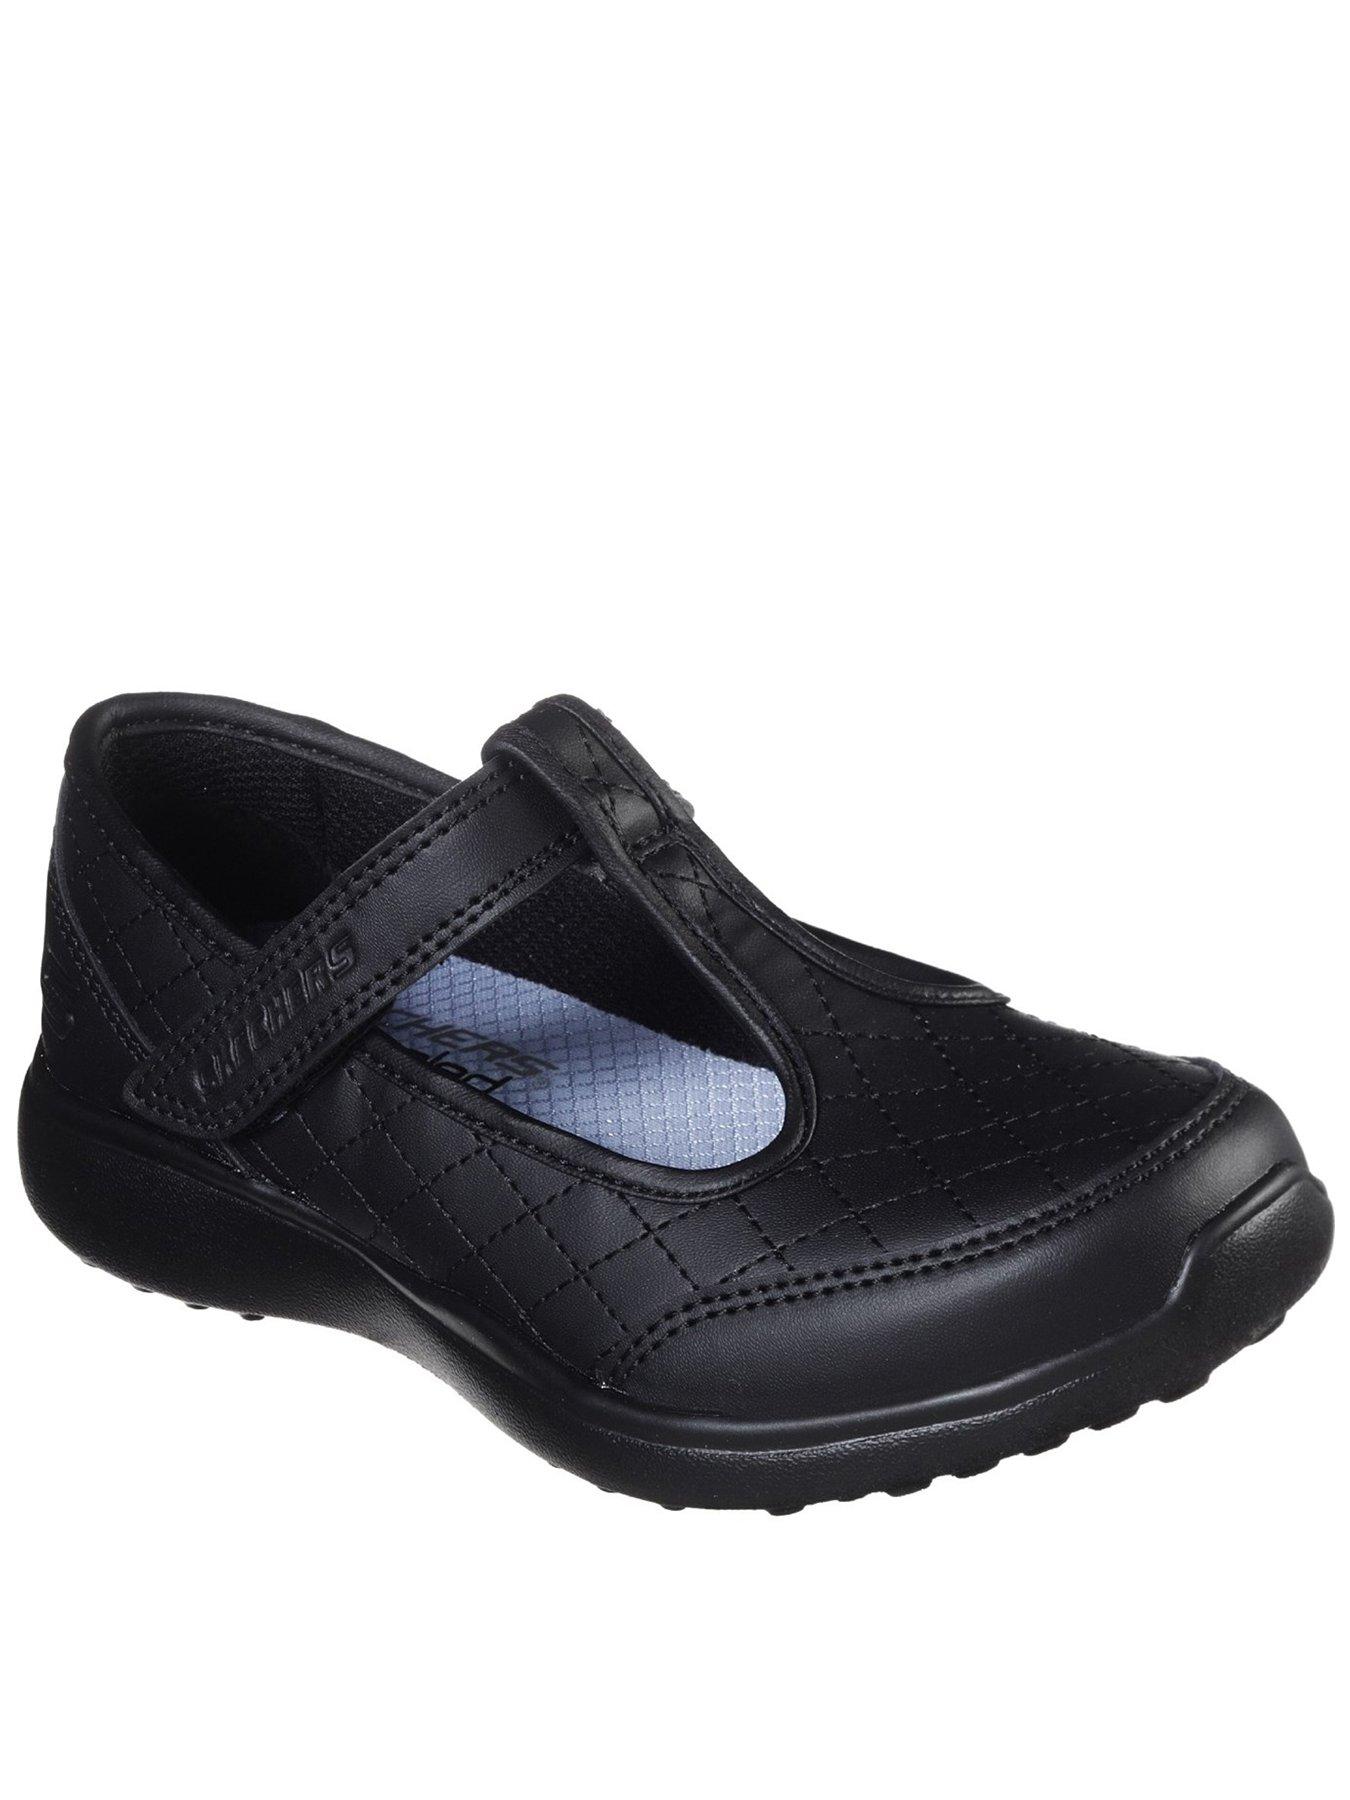 skechers black shoes 9.5